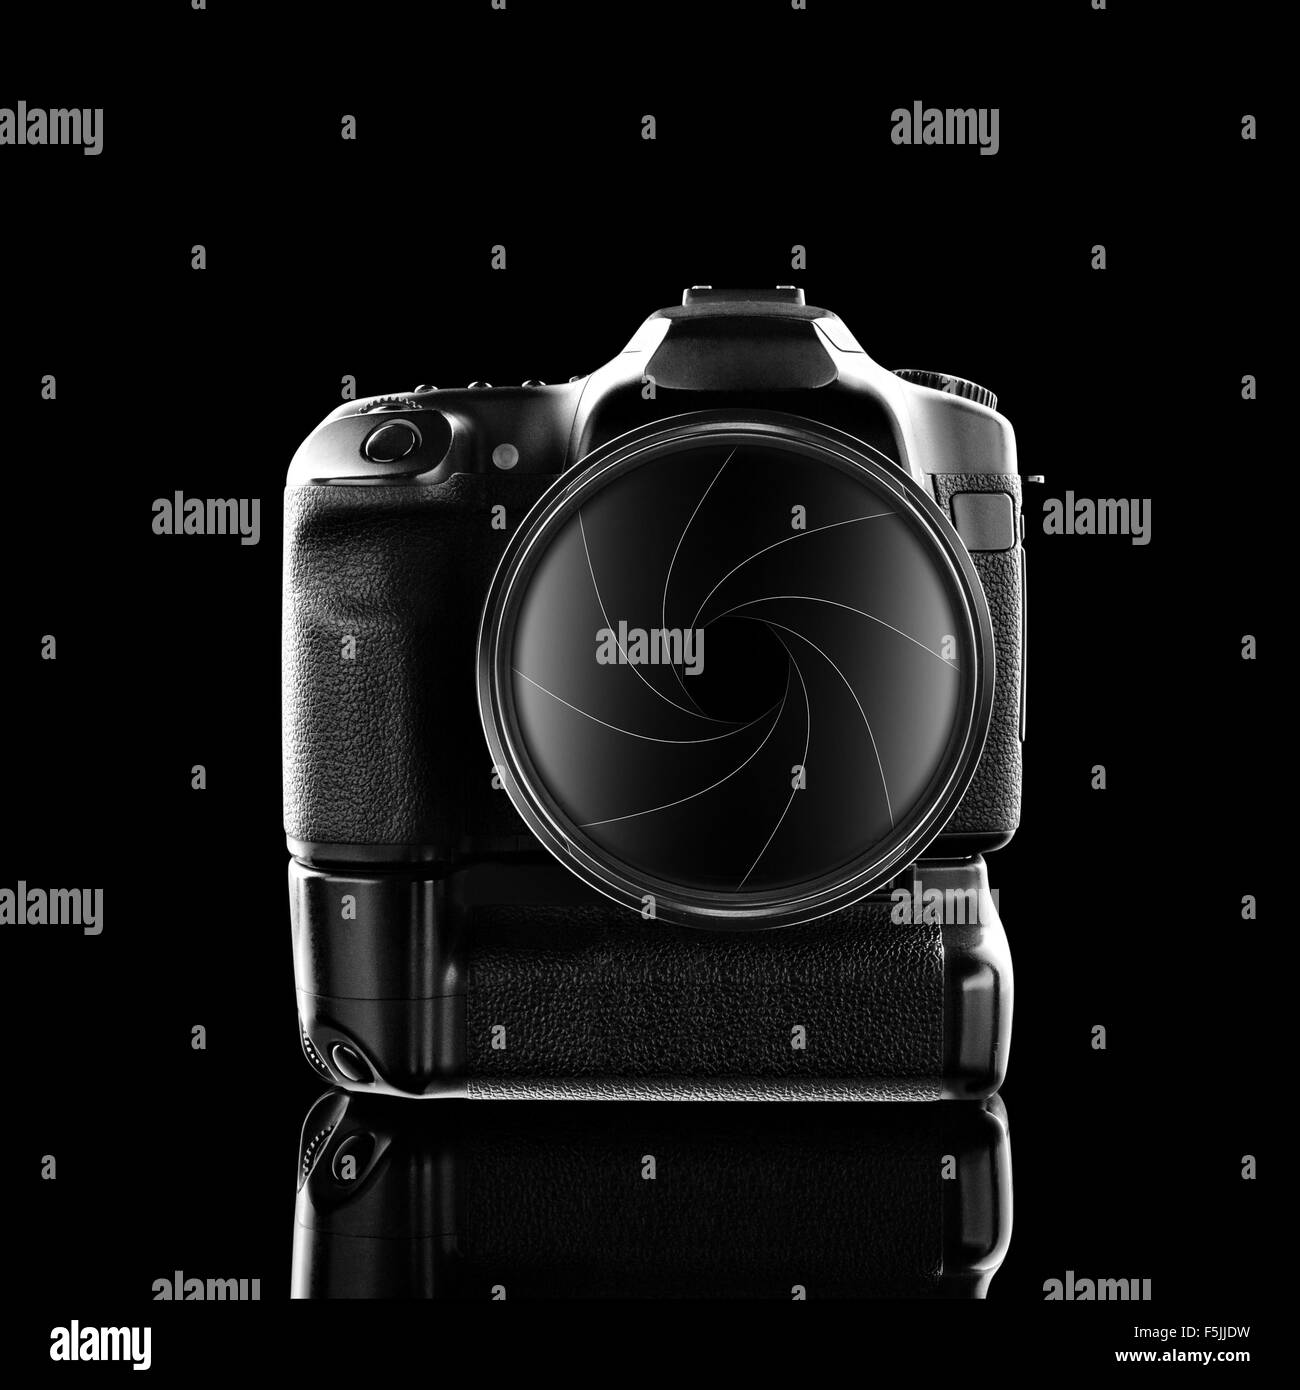 Digital camera isolated on black Stock Photo